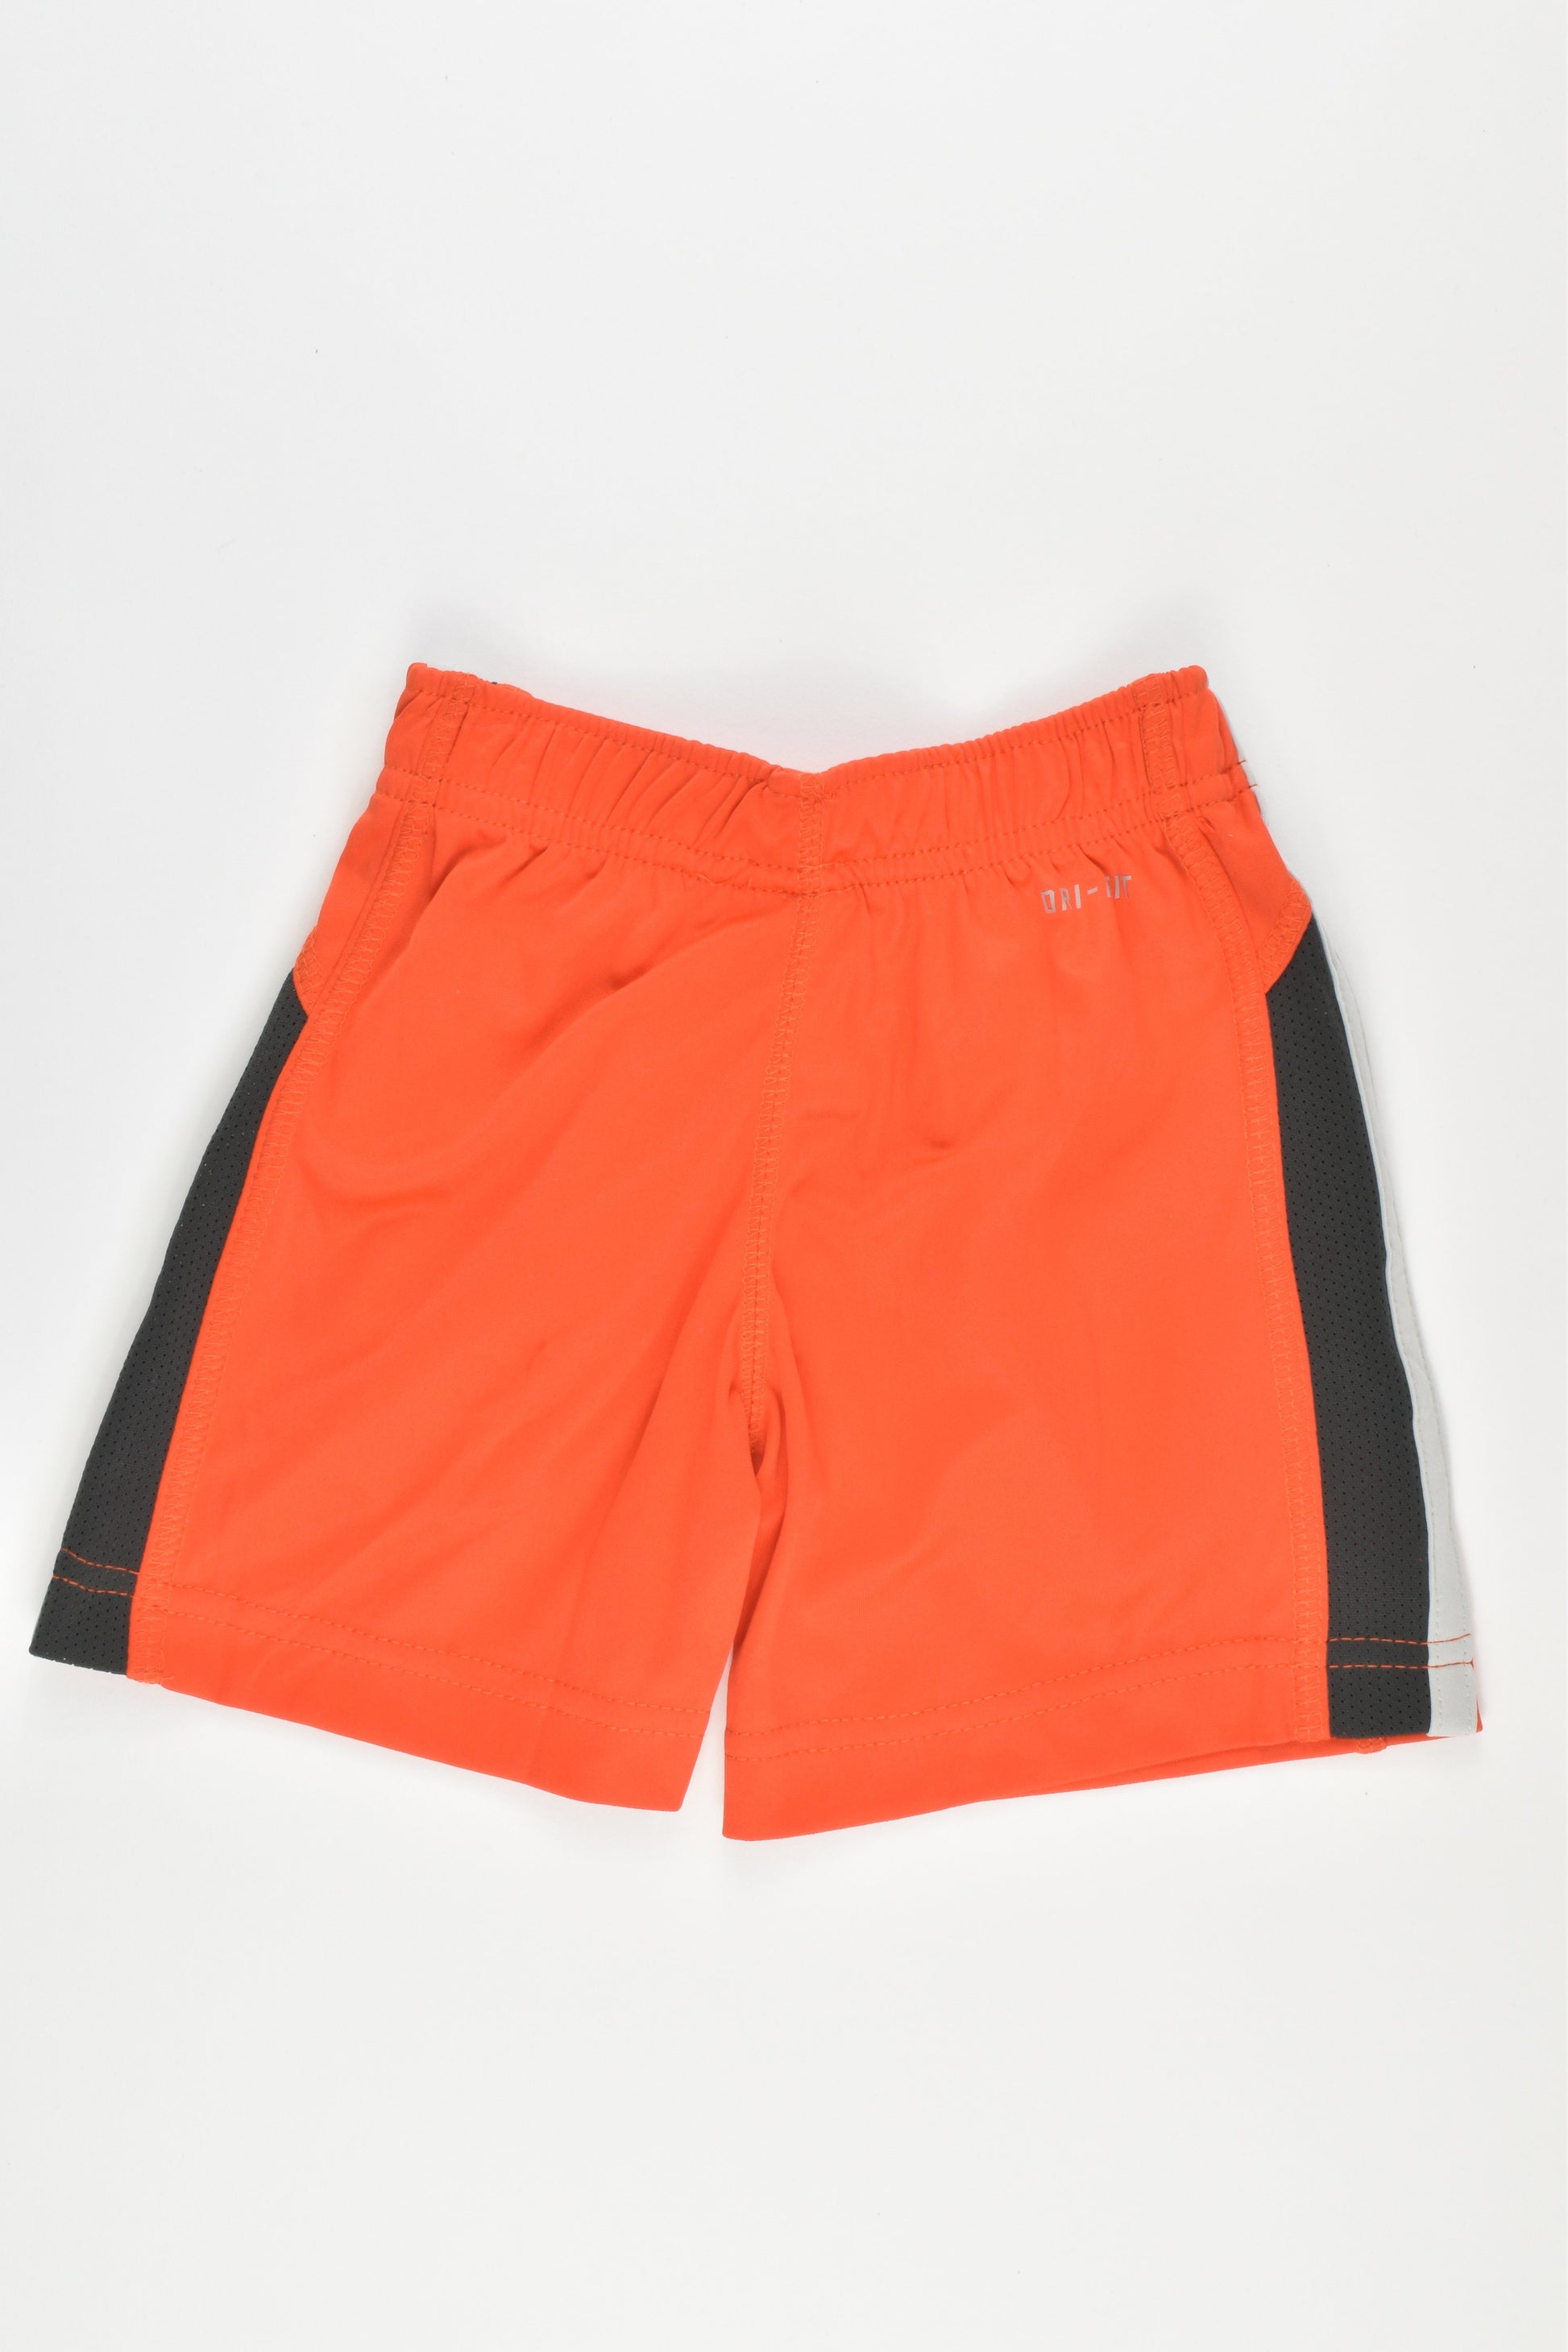 Nike Size 2 Dri-Fit Shorts